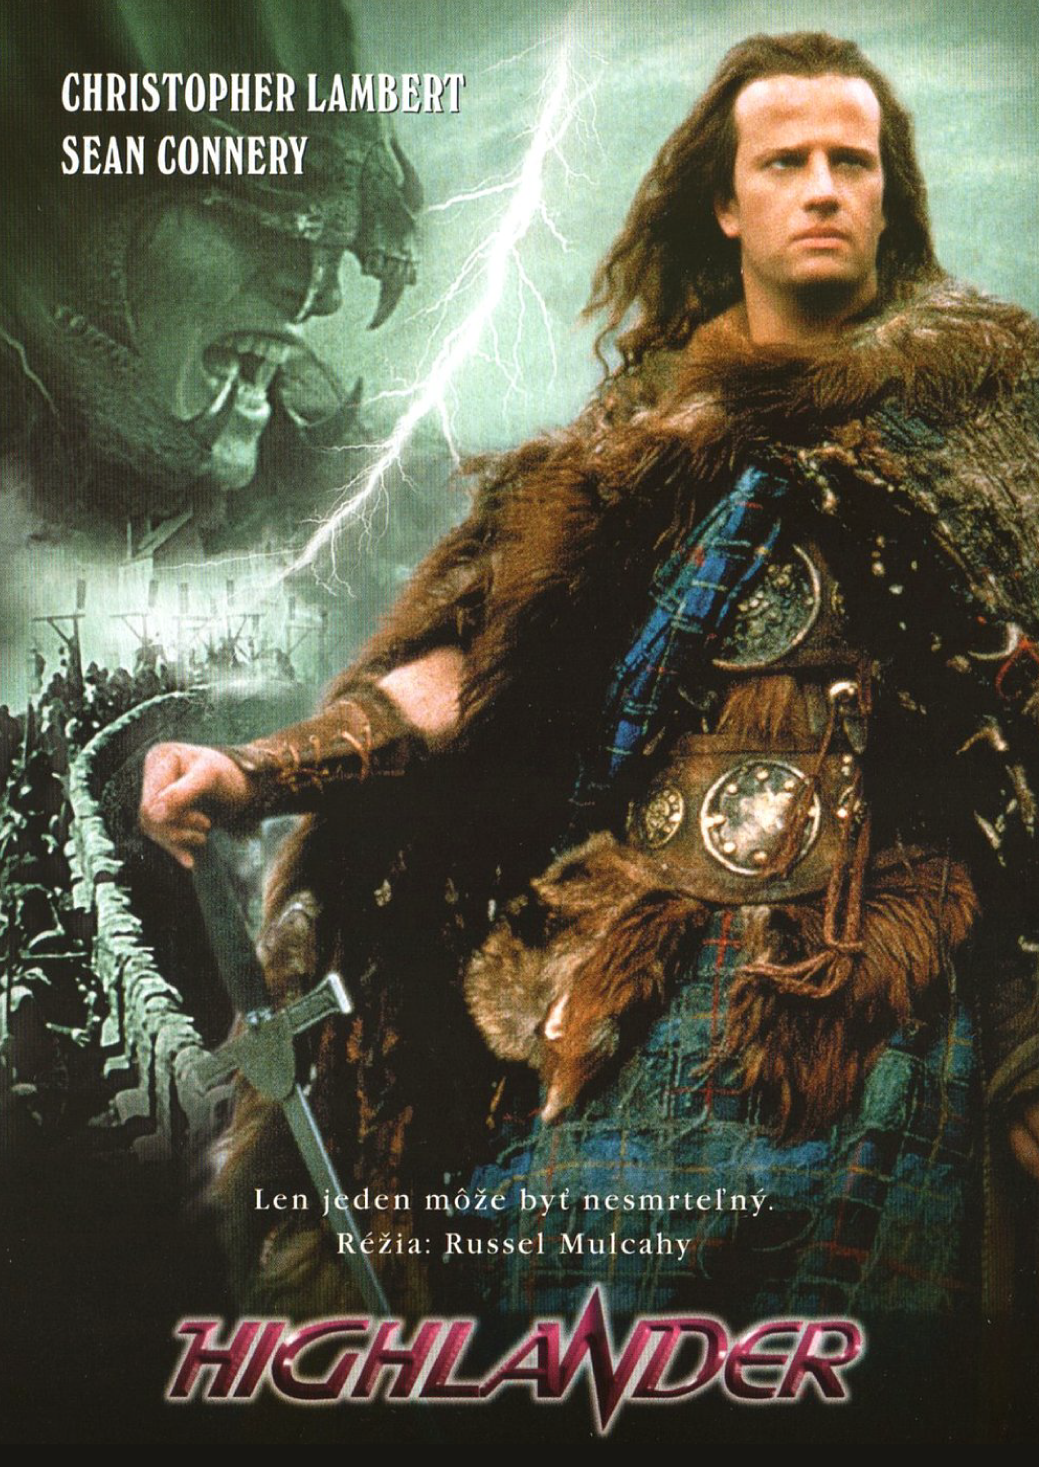 Highlander, Moviepedia